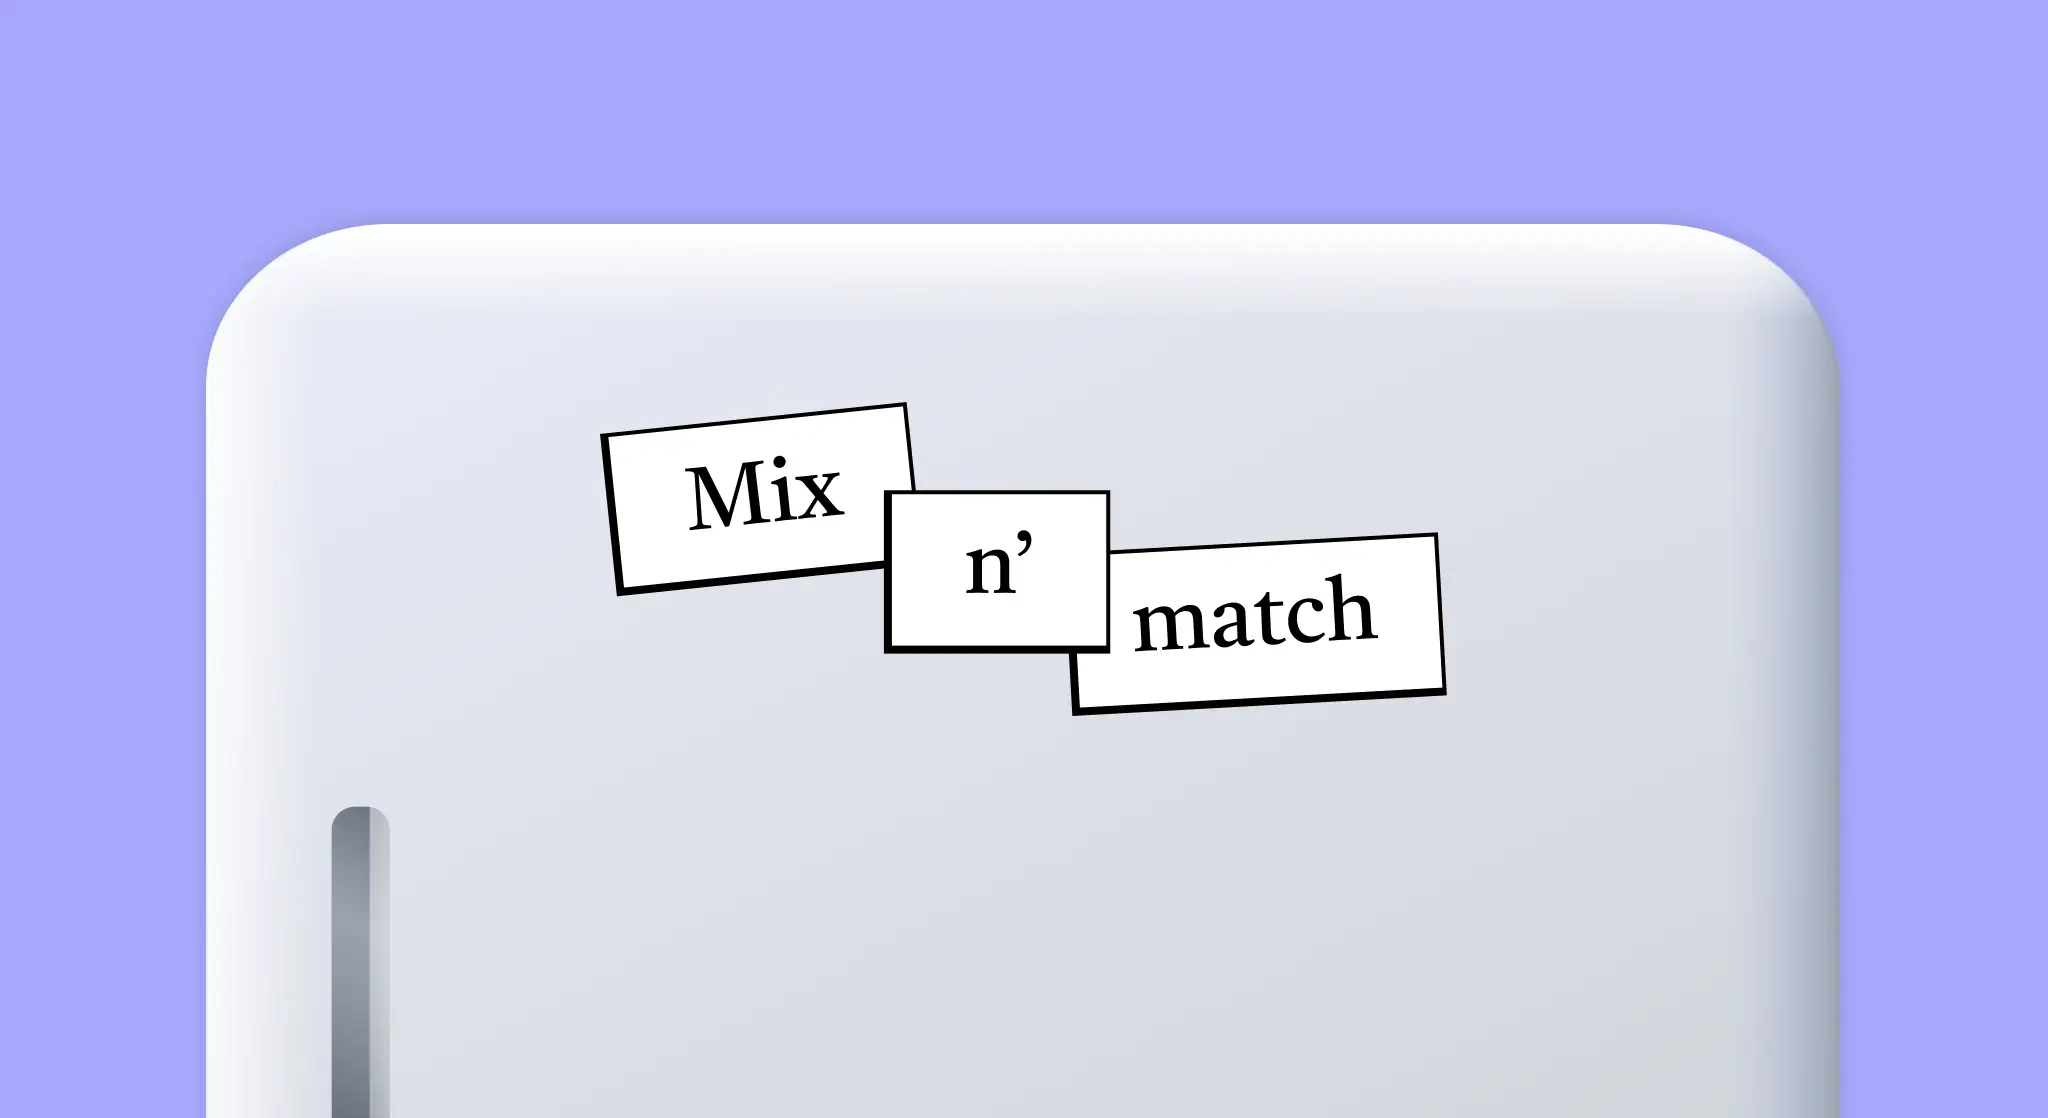 Build sentences with random fridge magnet words.